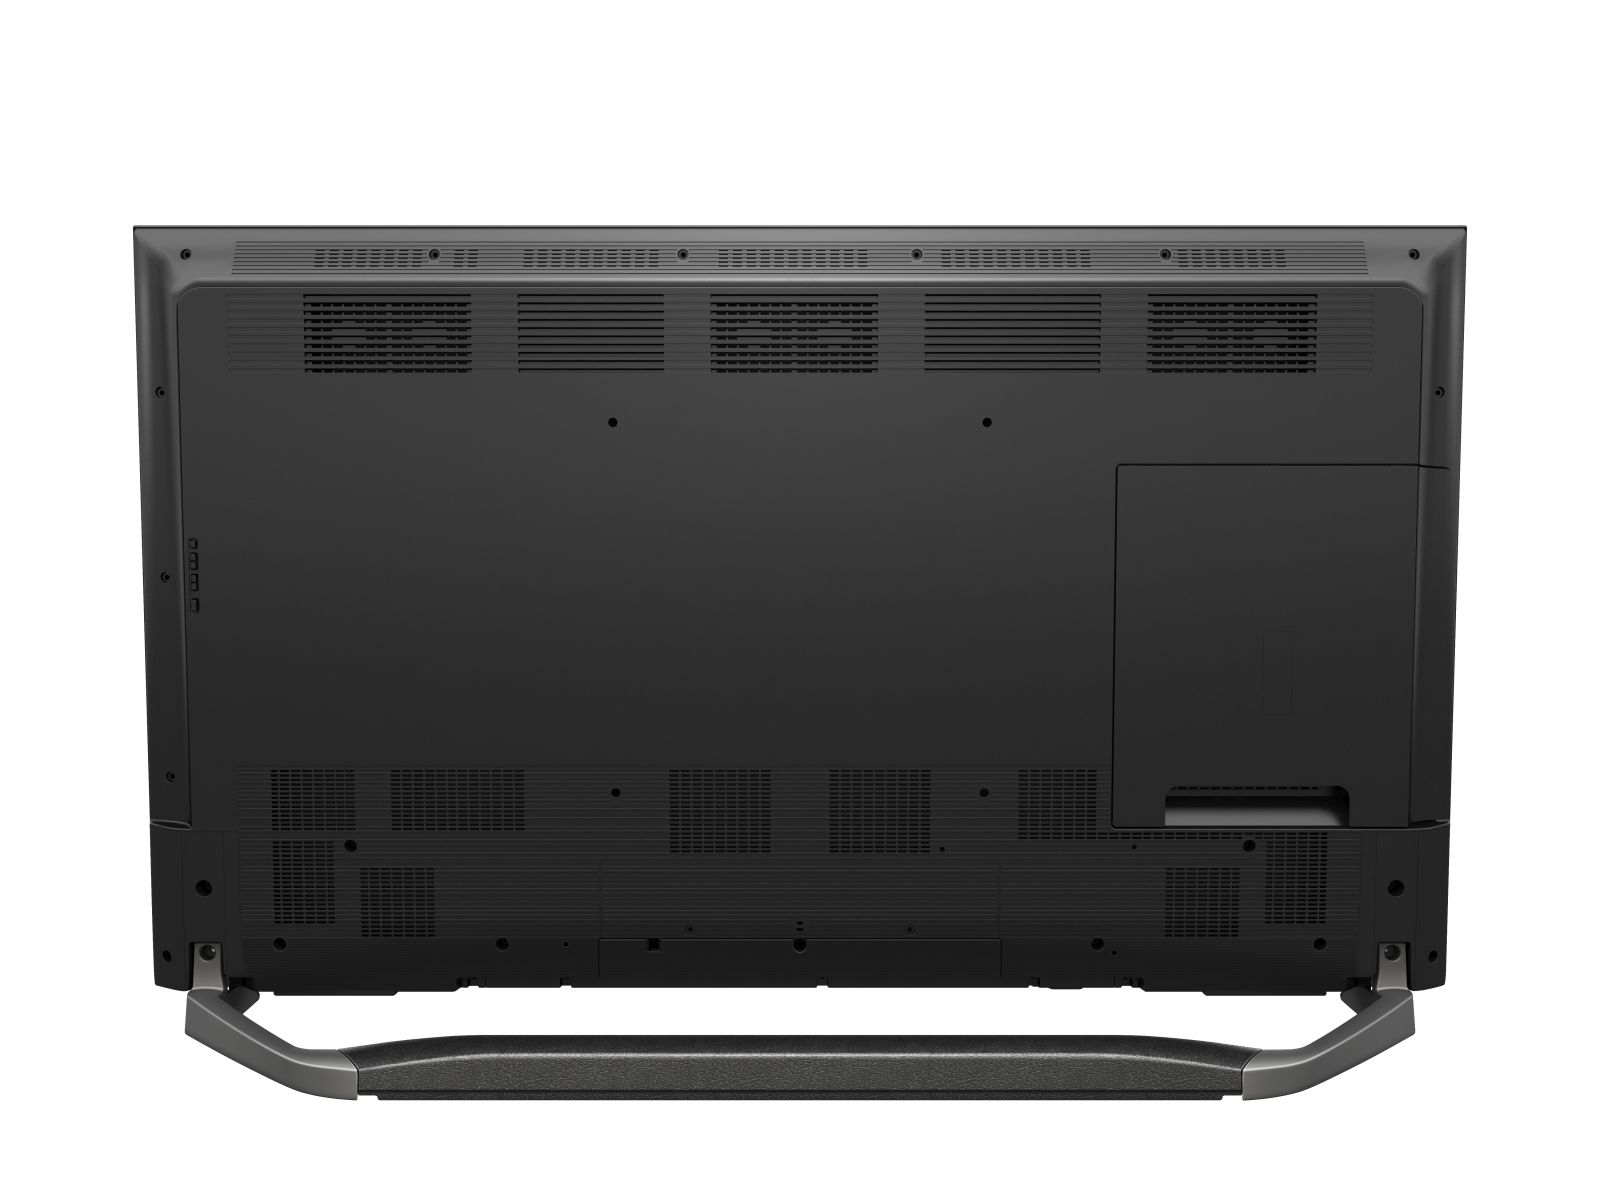 Panasonic DX900